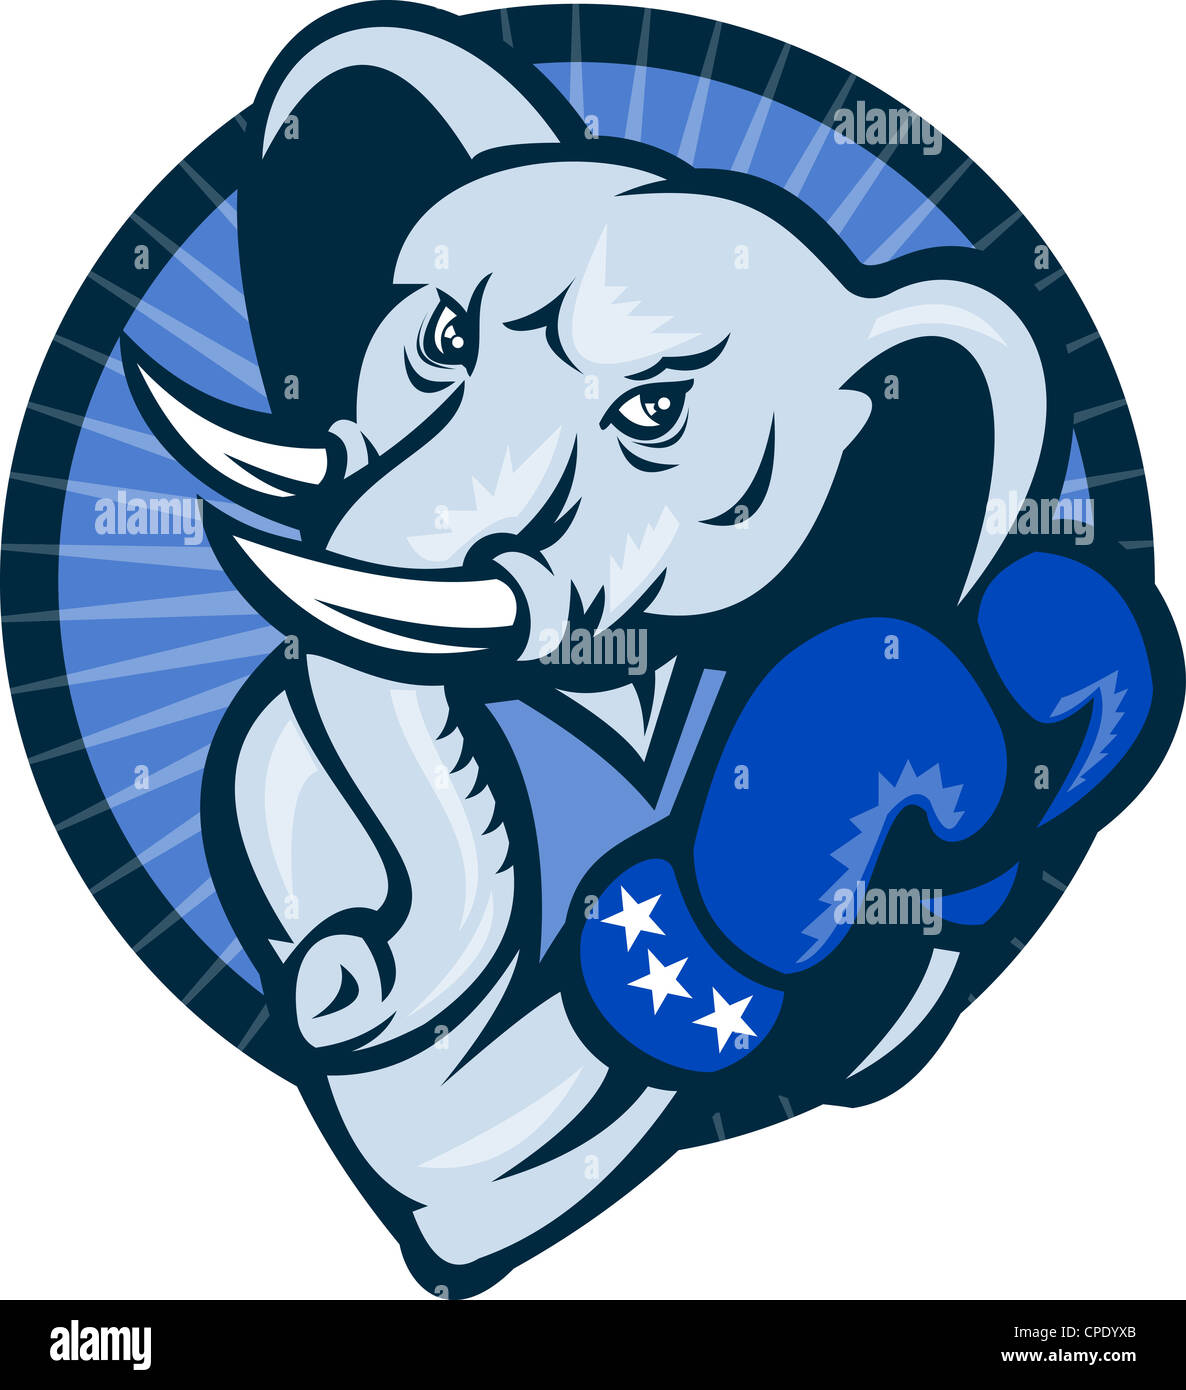 A cartoon elephant immagini e fotografie stock ad alta risoluzione - Alamy